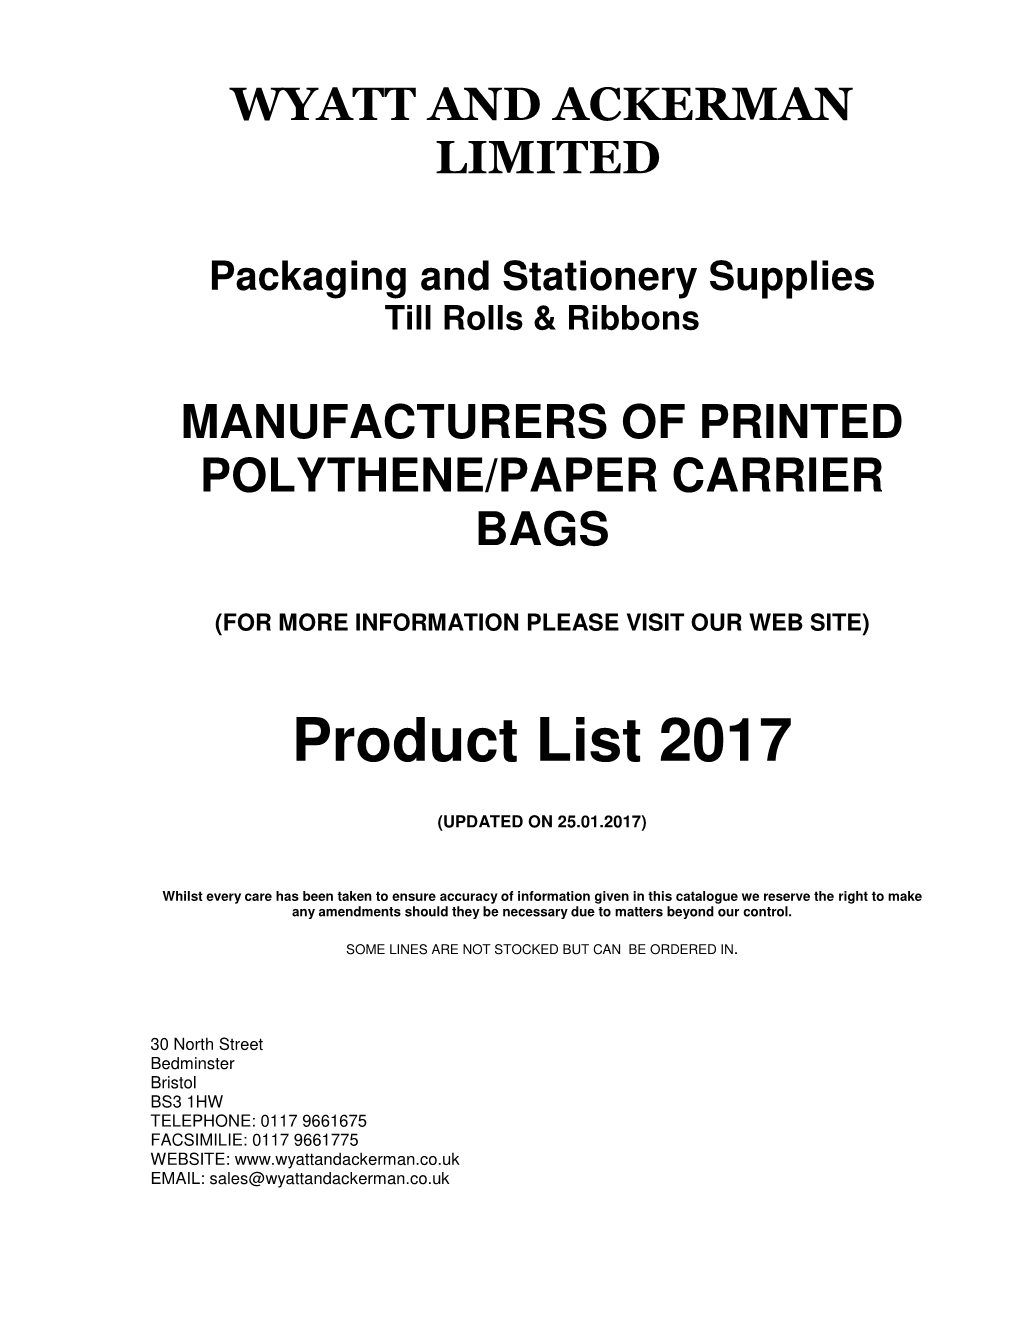 Product List 2017